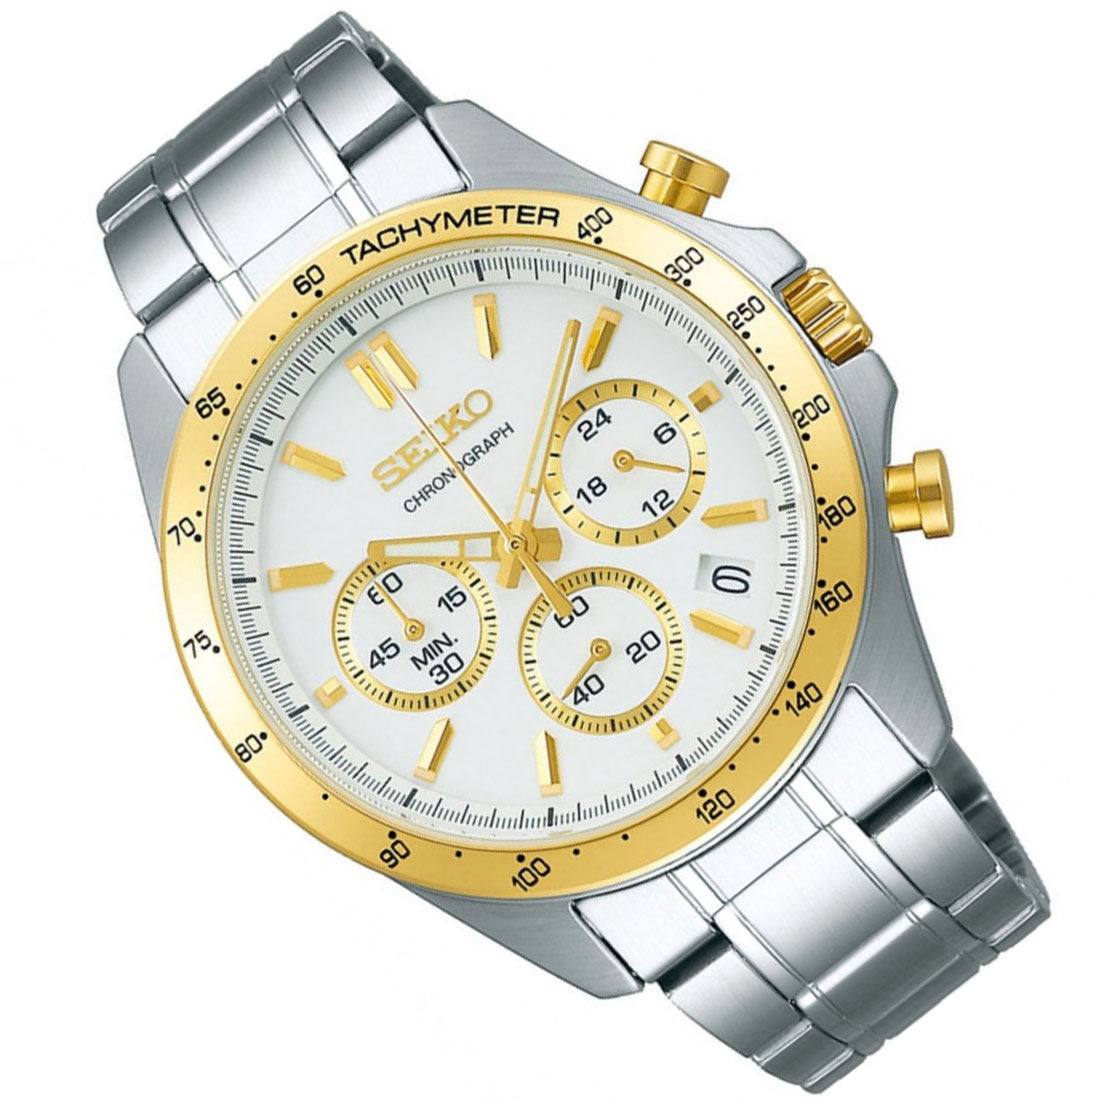 Seiko Spirit SBTR024 JDM Selection Chronograph White Dial Quartz Watch